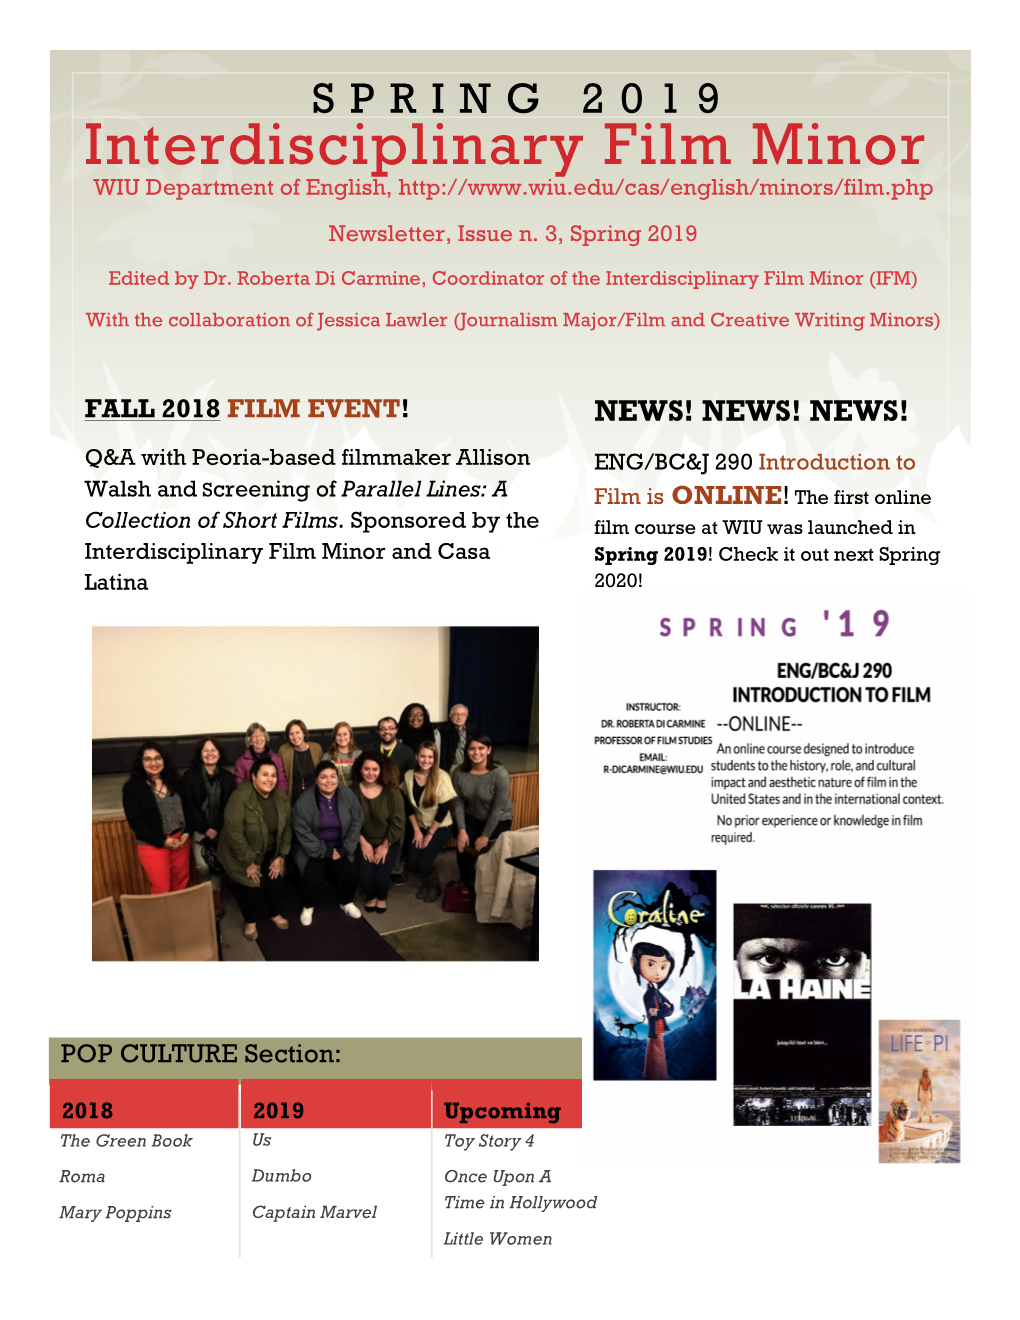 Interdisciplinary Film Minor WIU Department of English, Newsletter, Issue N